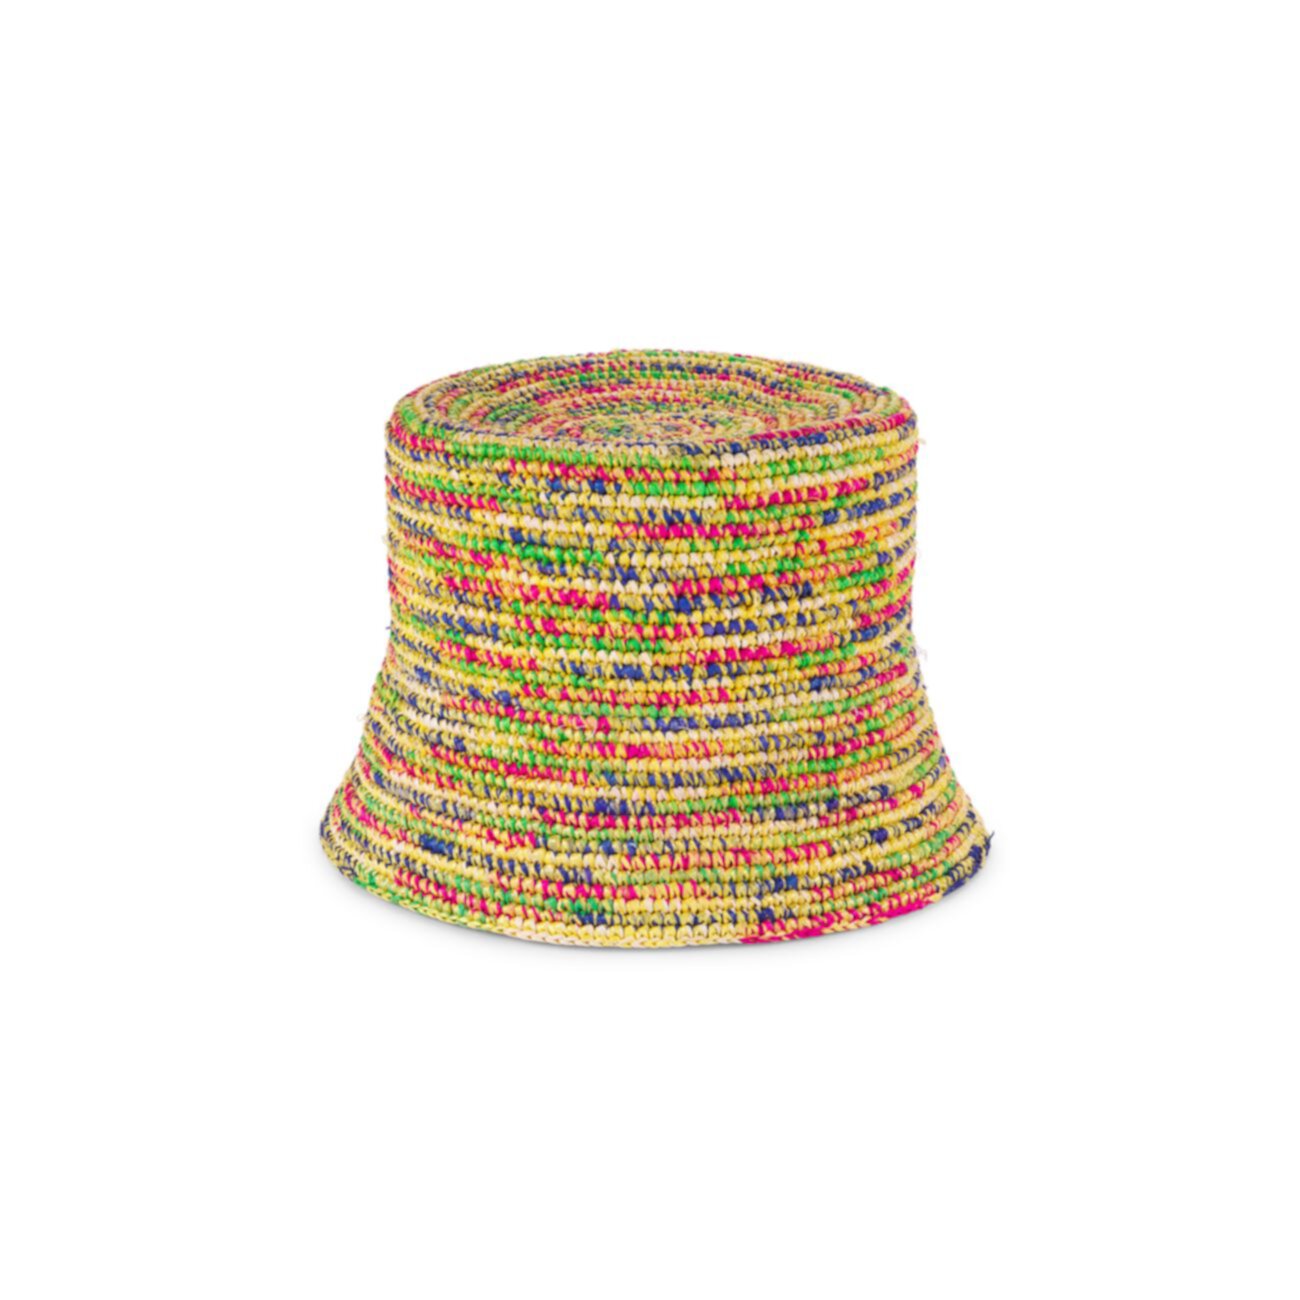 Mediterranean Pop The Traveler, Разноцветная шляпа с абажуром Sensi Studio